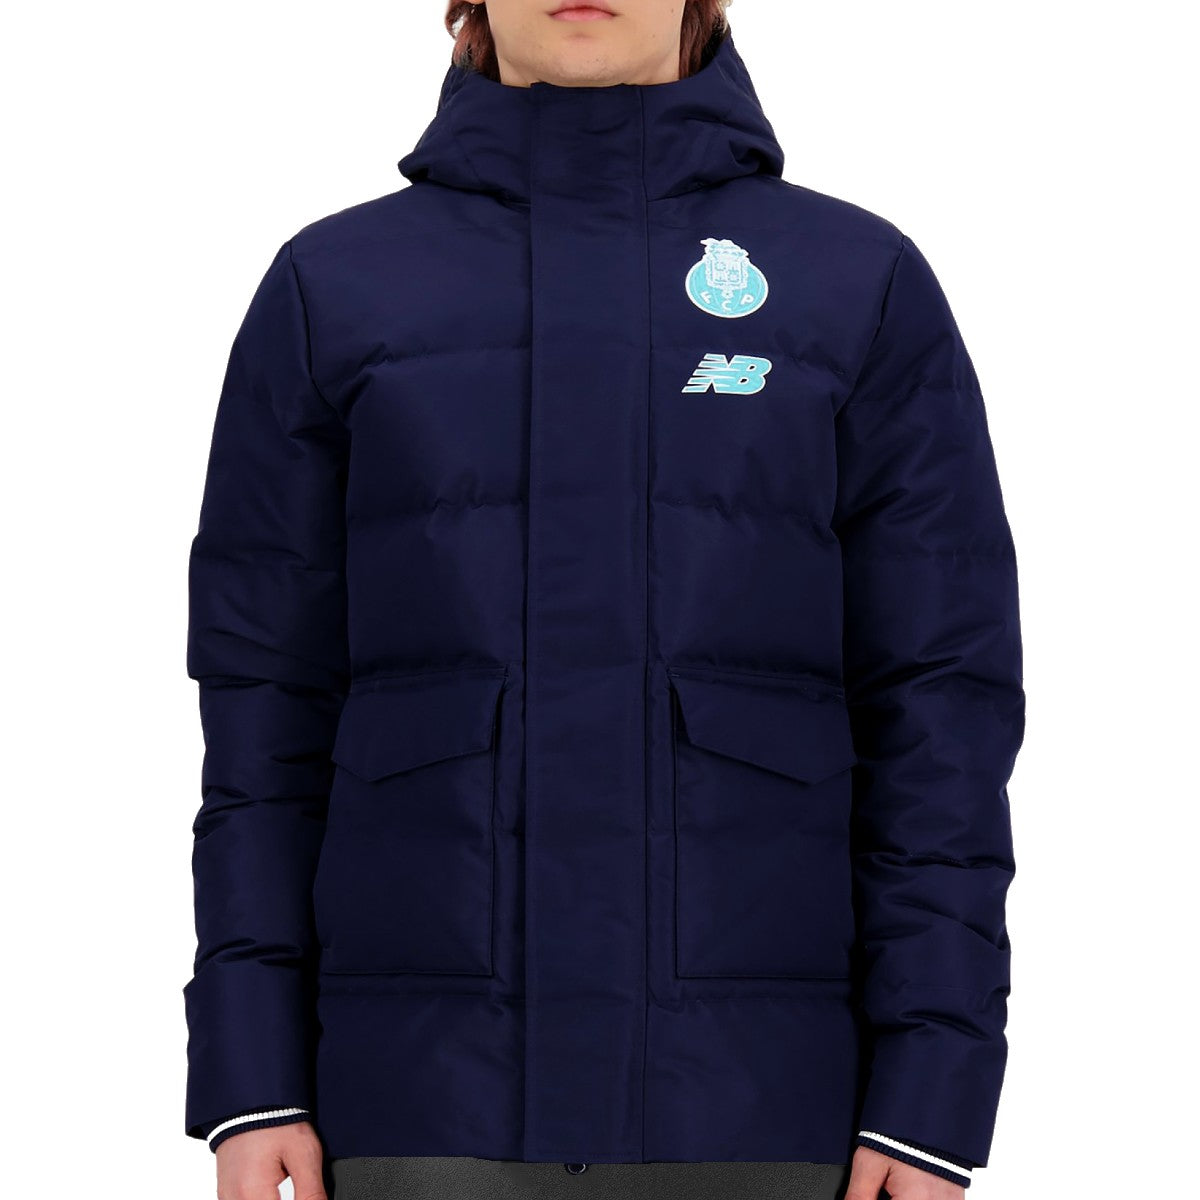 New Balance Winter Jacket - Regular fit